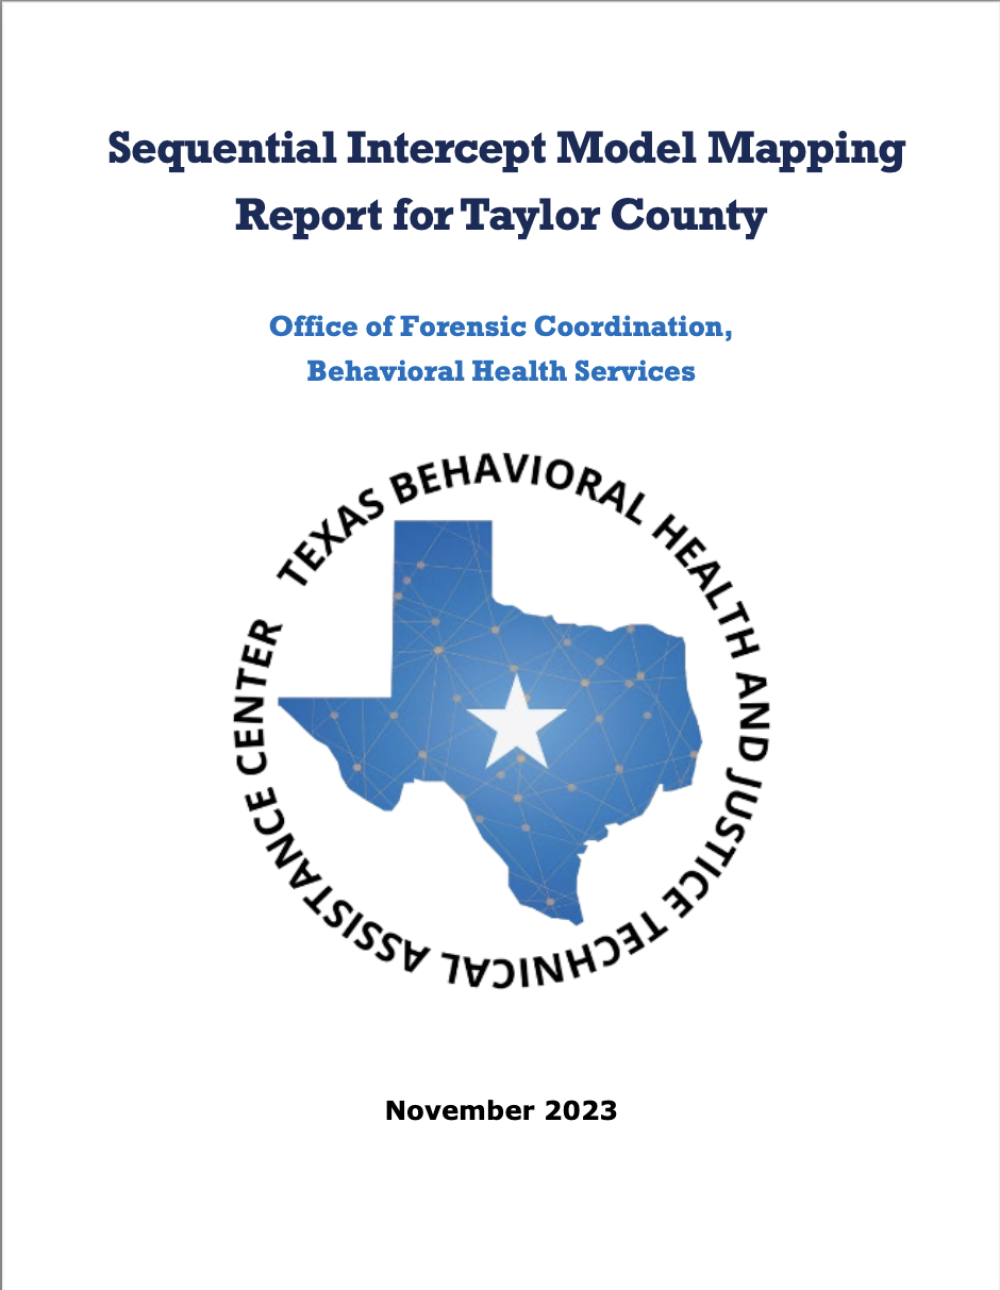 Taylor County SIM Report